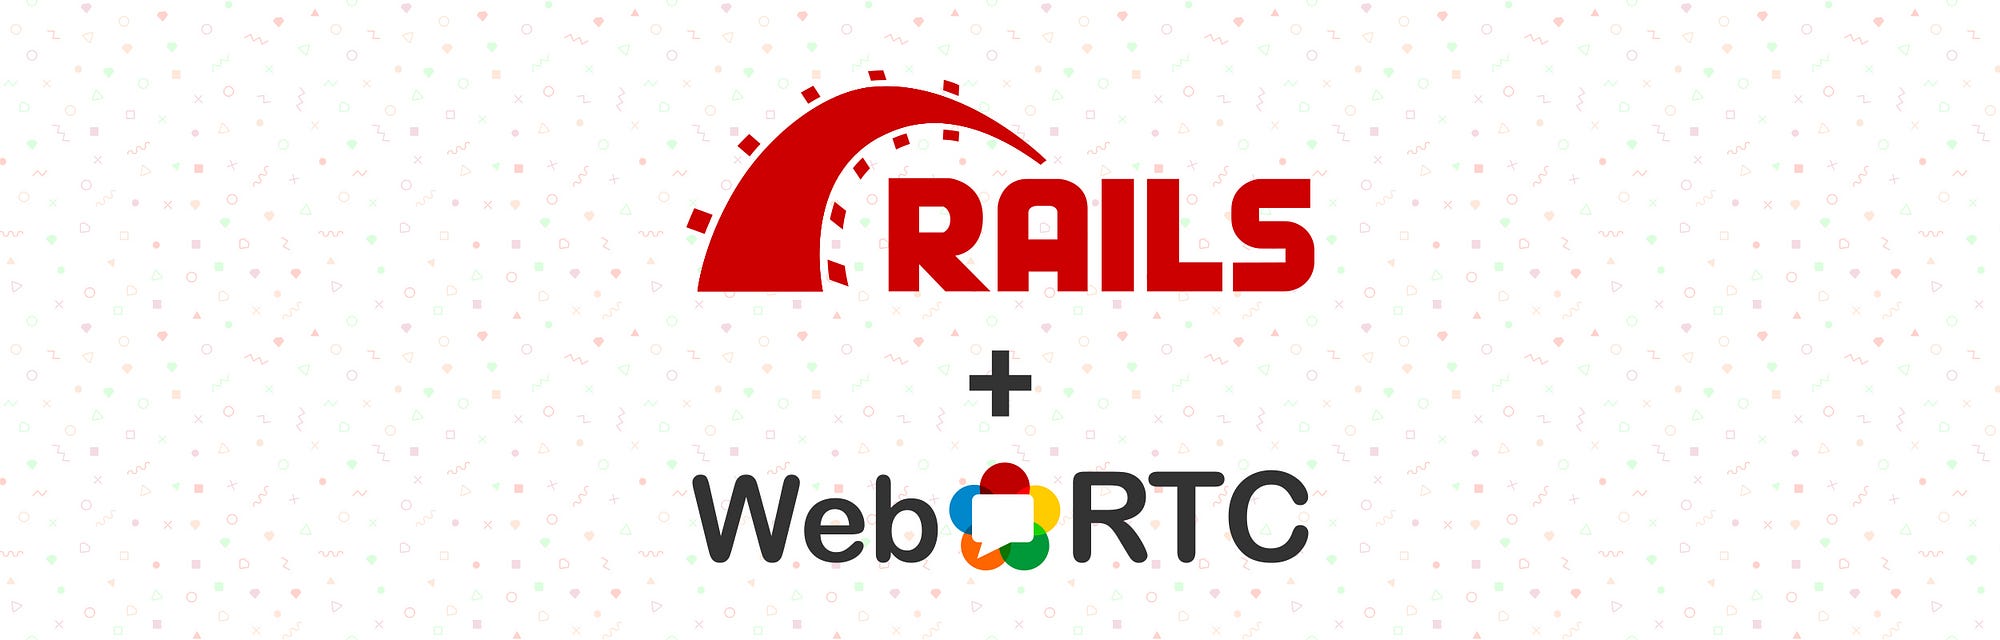 WebRTC on Rails